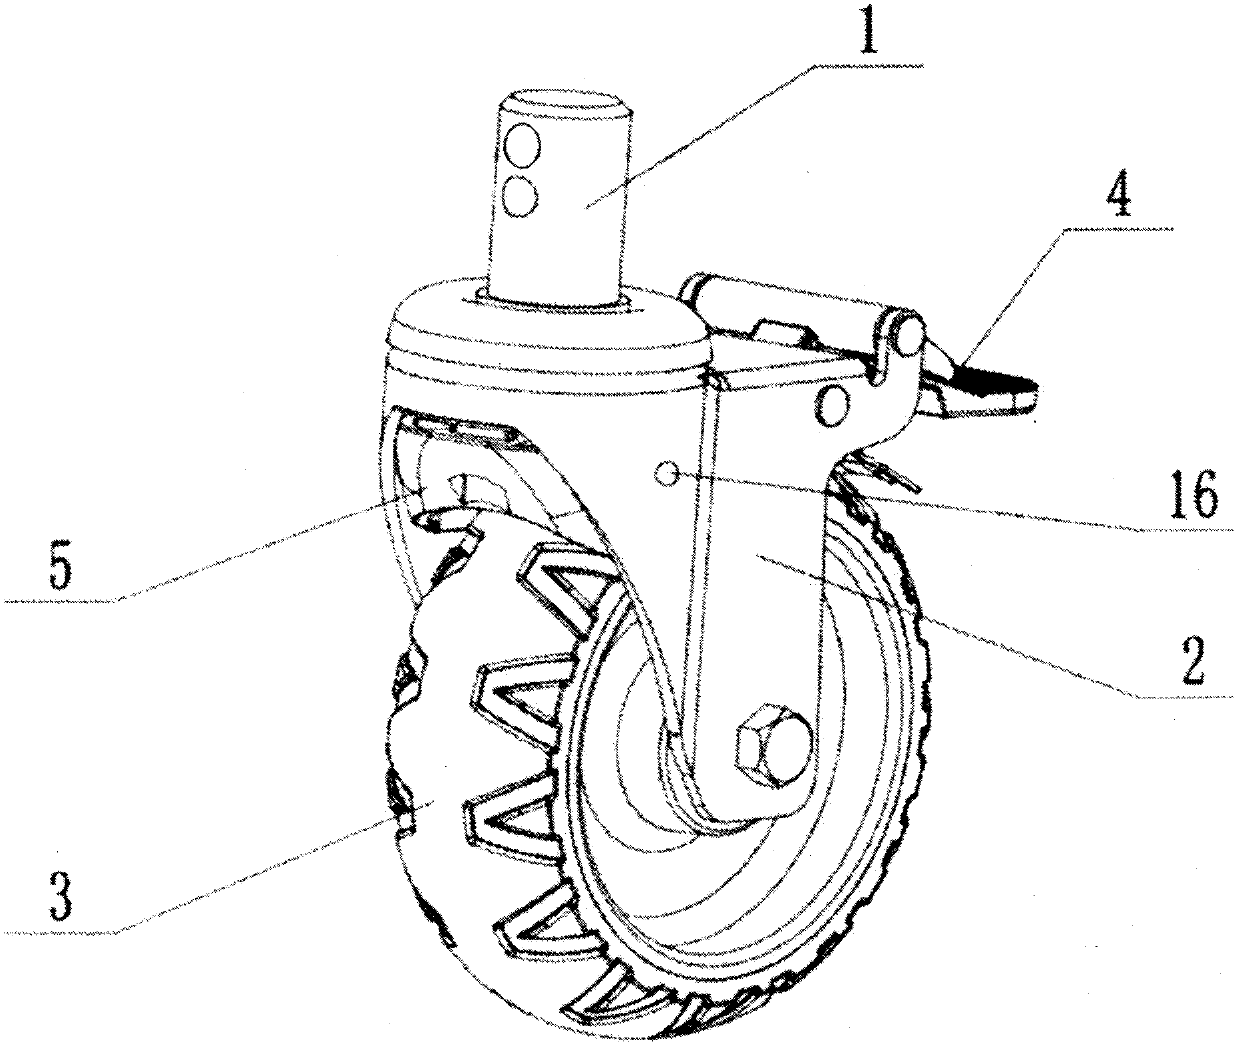 Idler wheel device